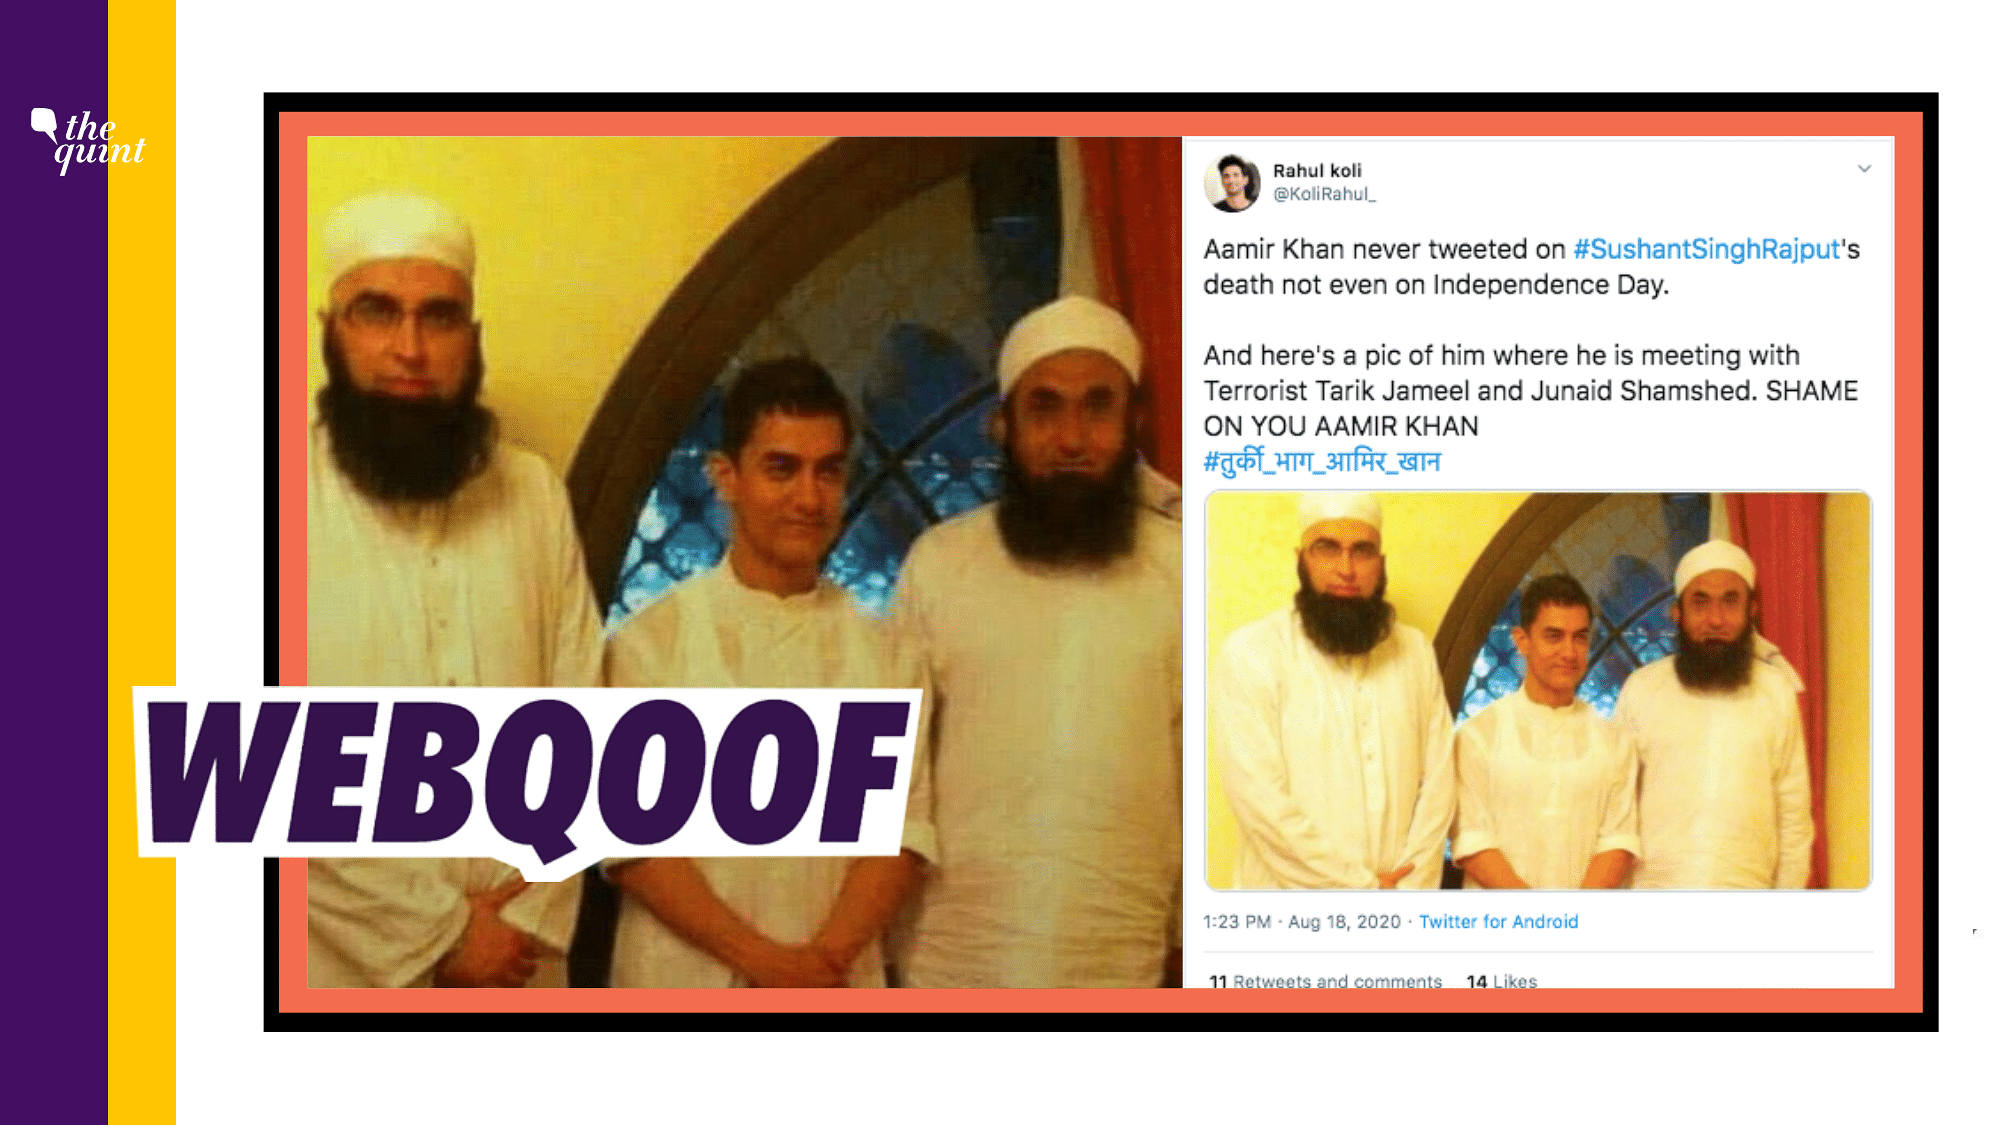 The men seen with Aamir Khan are late Pakistani singer-turned-Islamic preacher Junaid Jamshed and spiritual mentor Tariq Jameel.